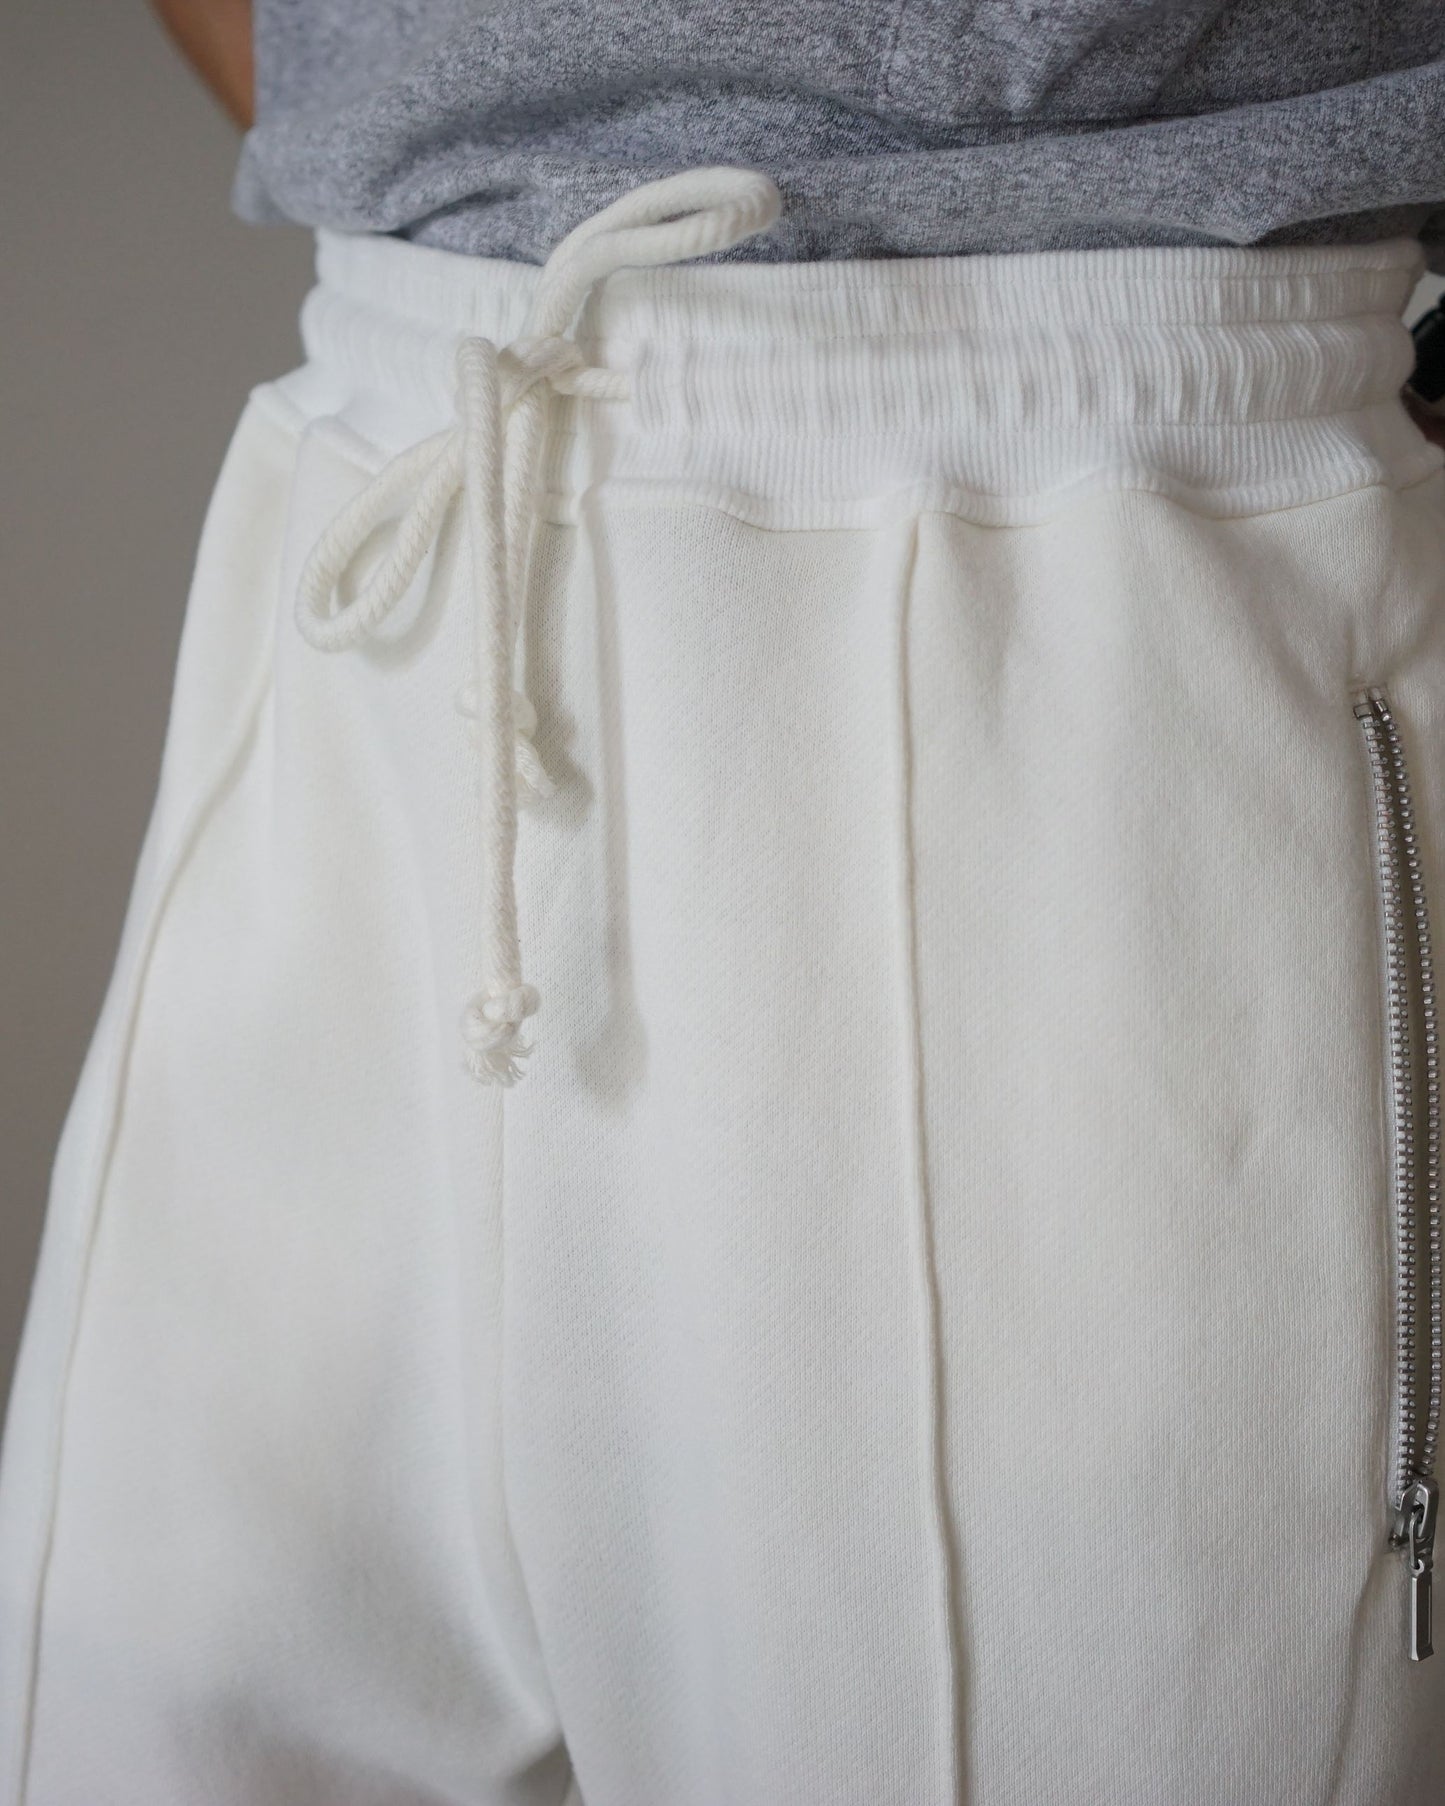 MATSUFUJI / Carry Pocket Sweat Pants for feets "WHITE"